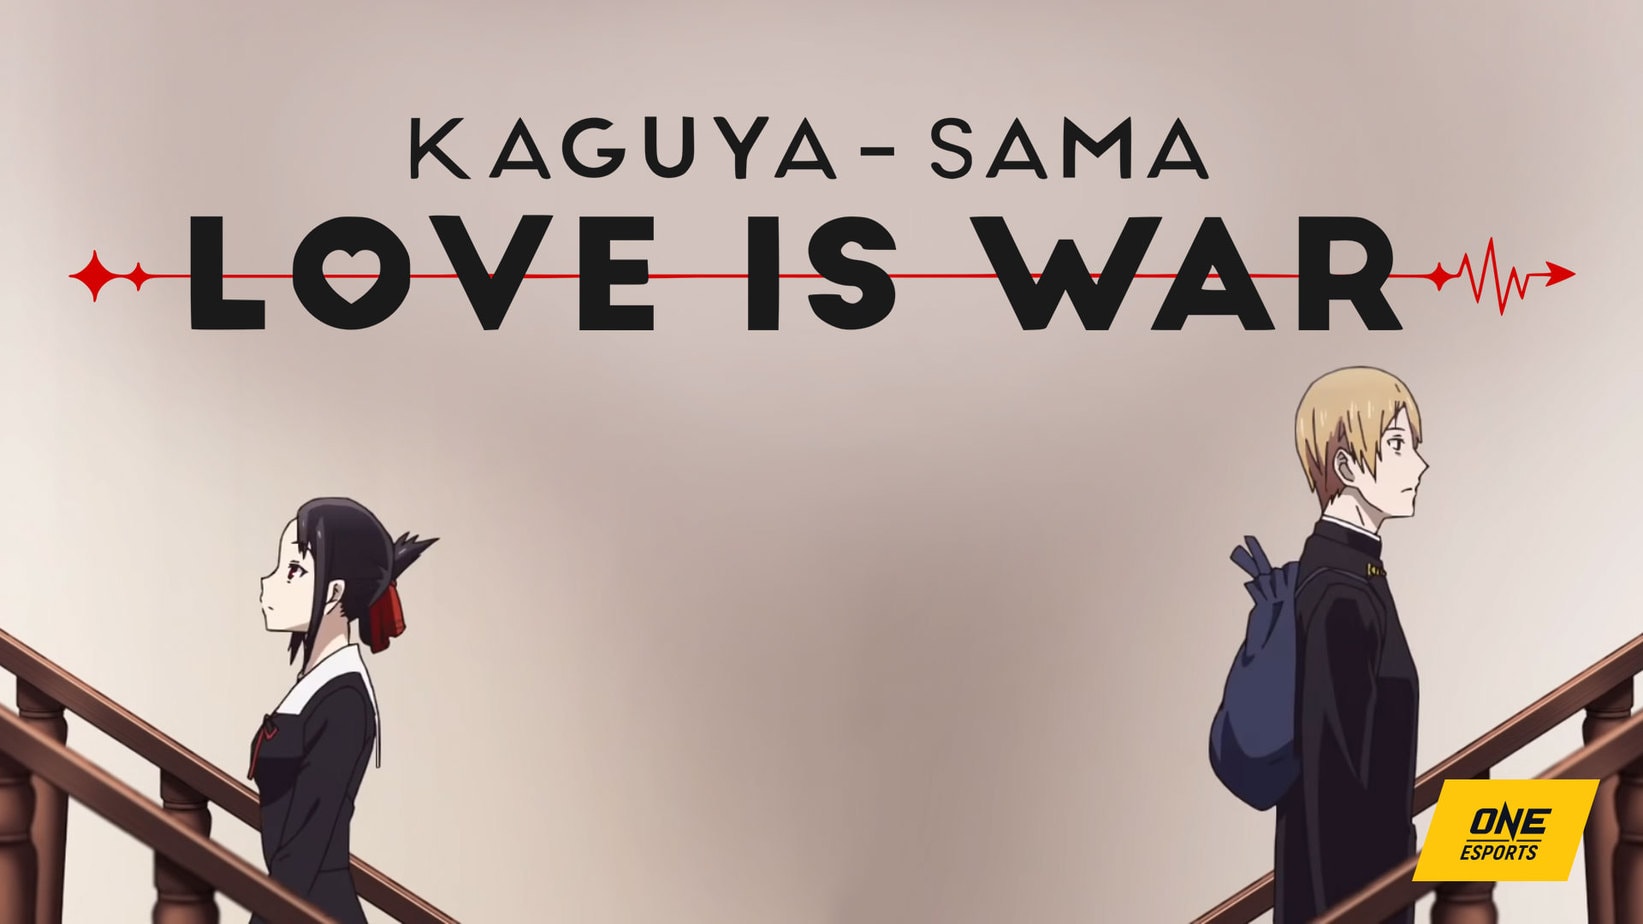 Kaguya-sama season 3 anime: Release date, story, characters, seiyuu, manga  | ONE Esports